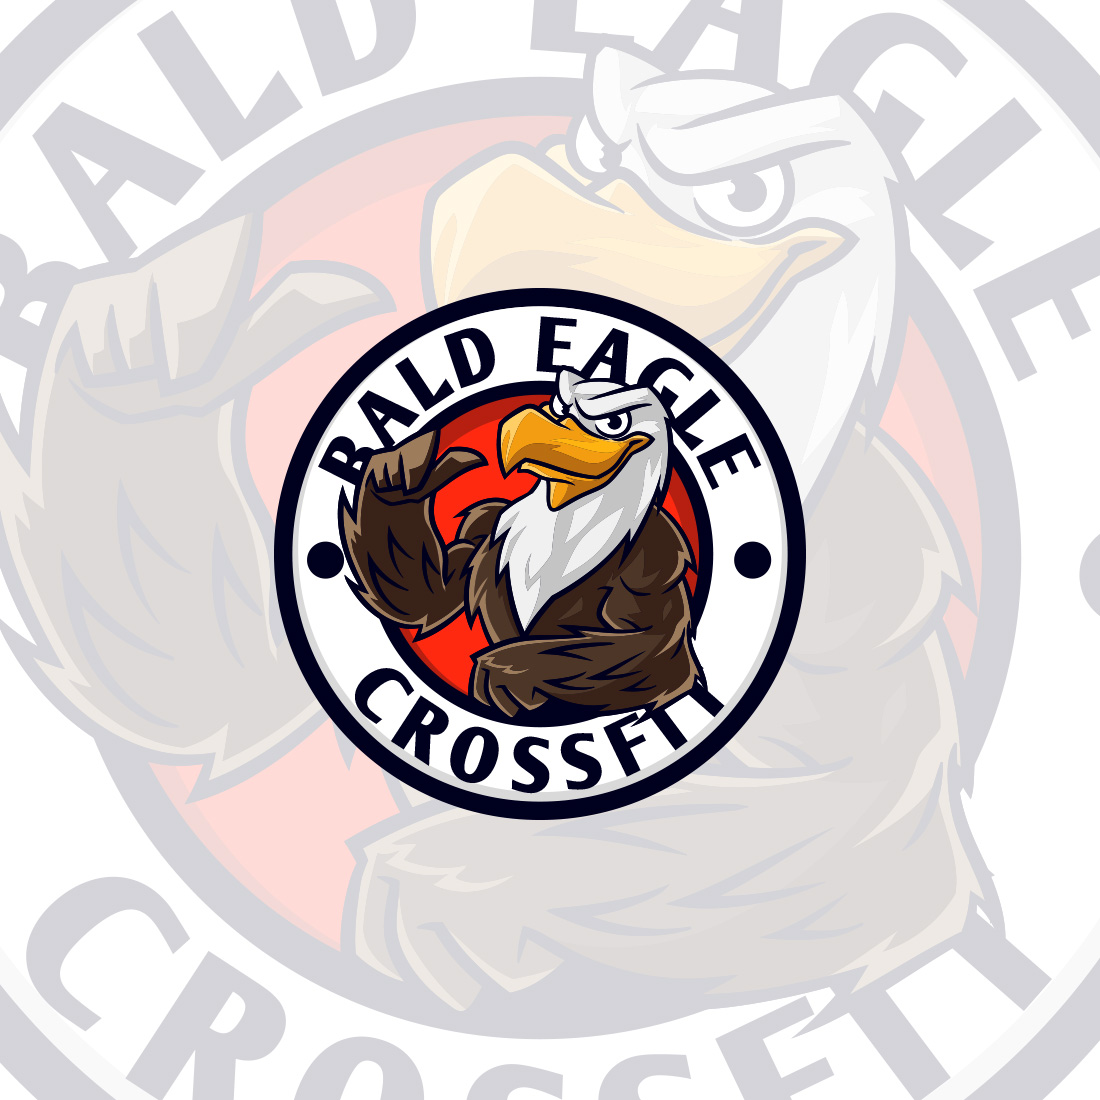 Eagle Bandge Logo Design cover image.